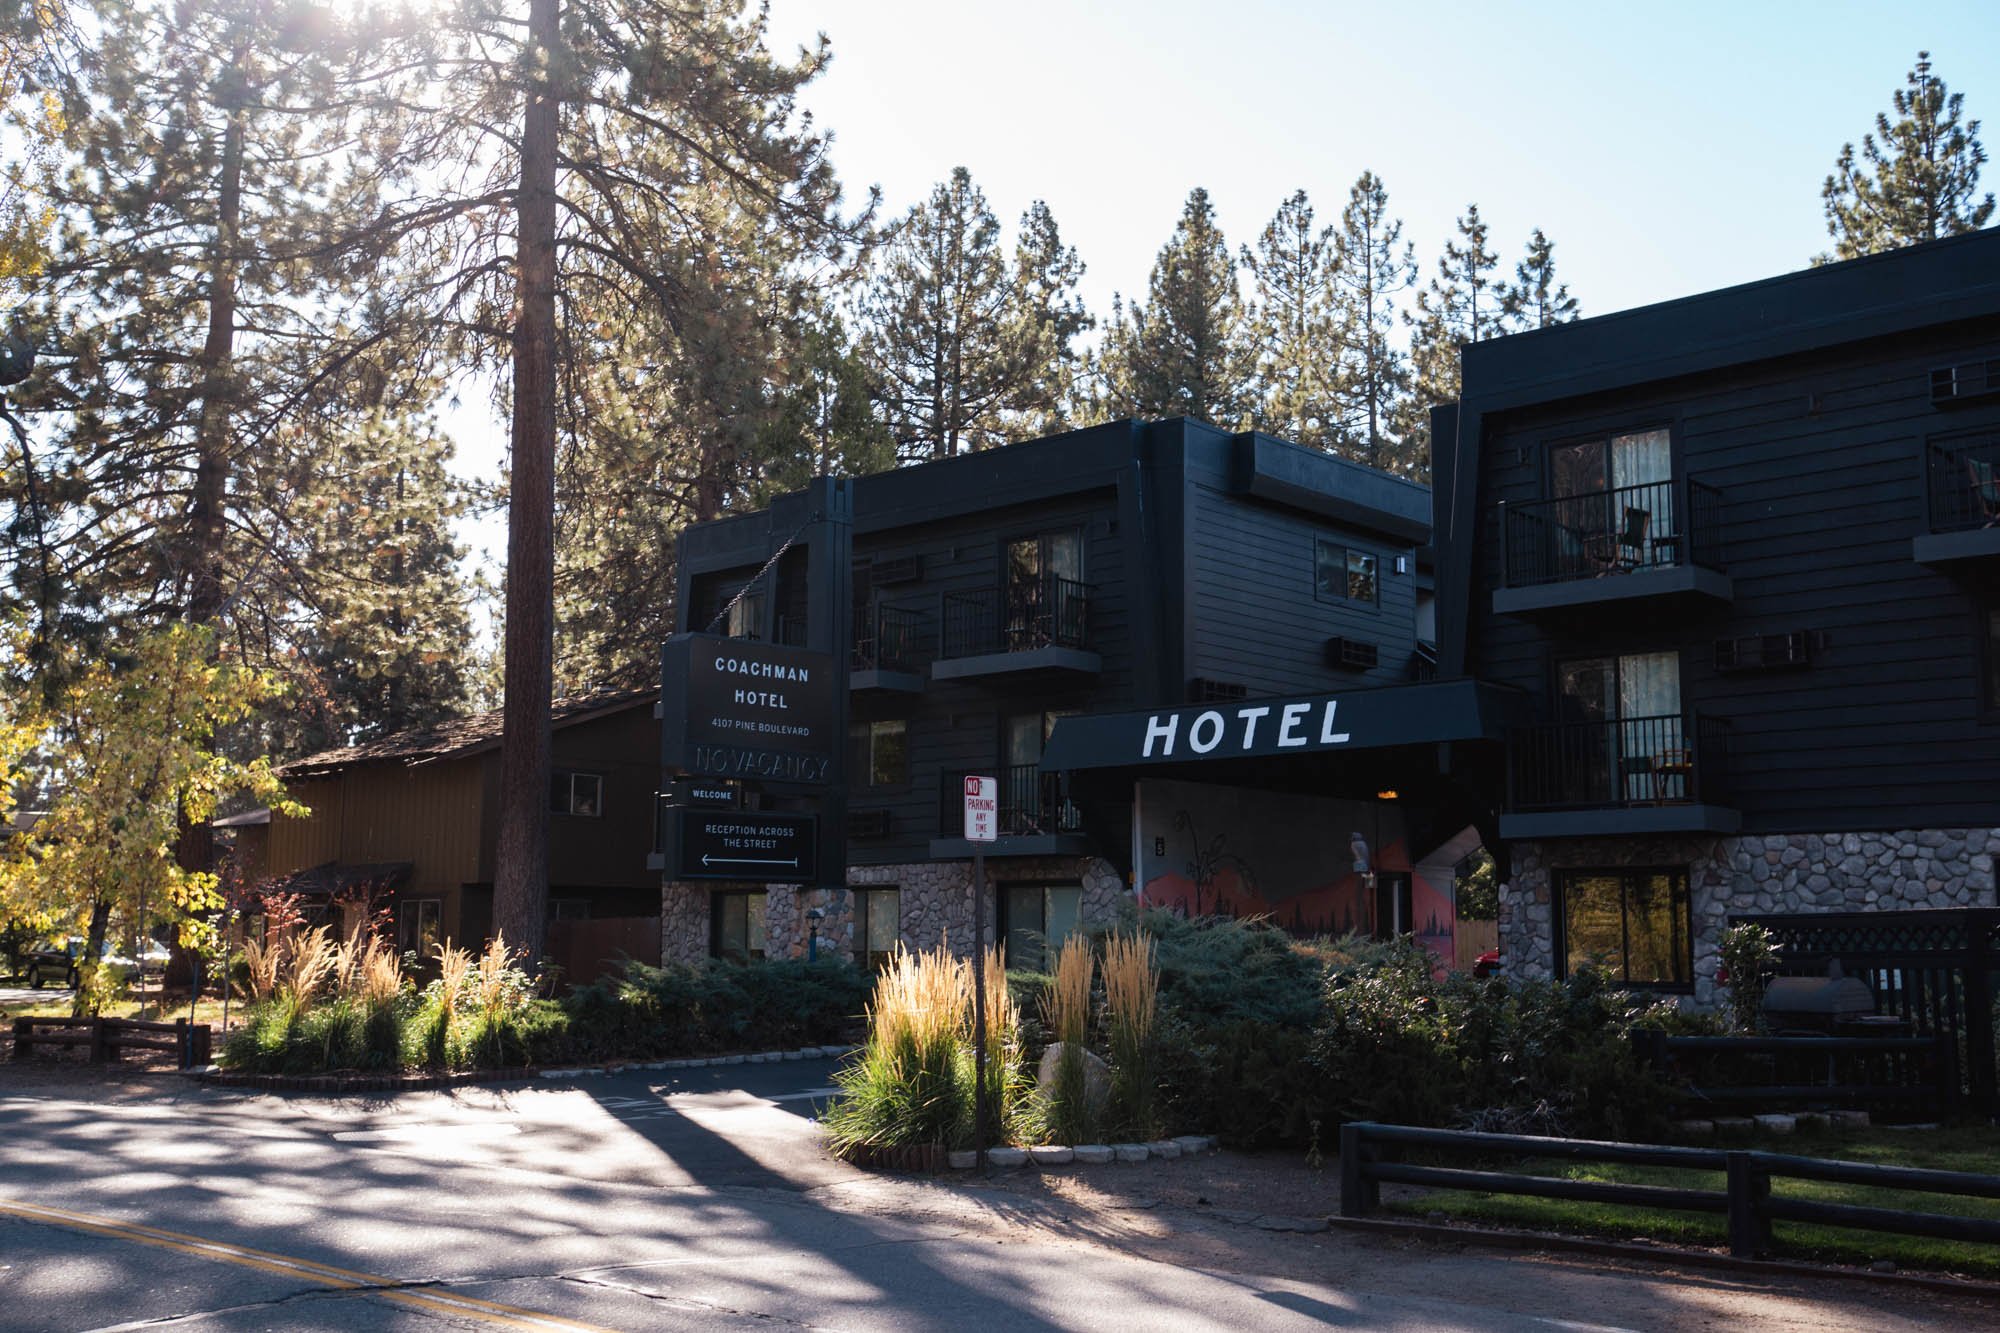 Das Coachman Hotel in South Lake Tahoe | Ein Hotel Review